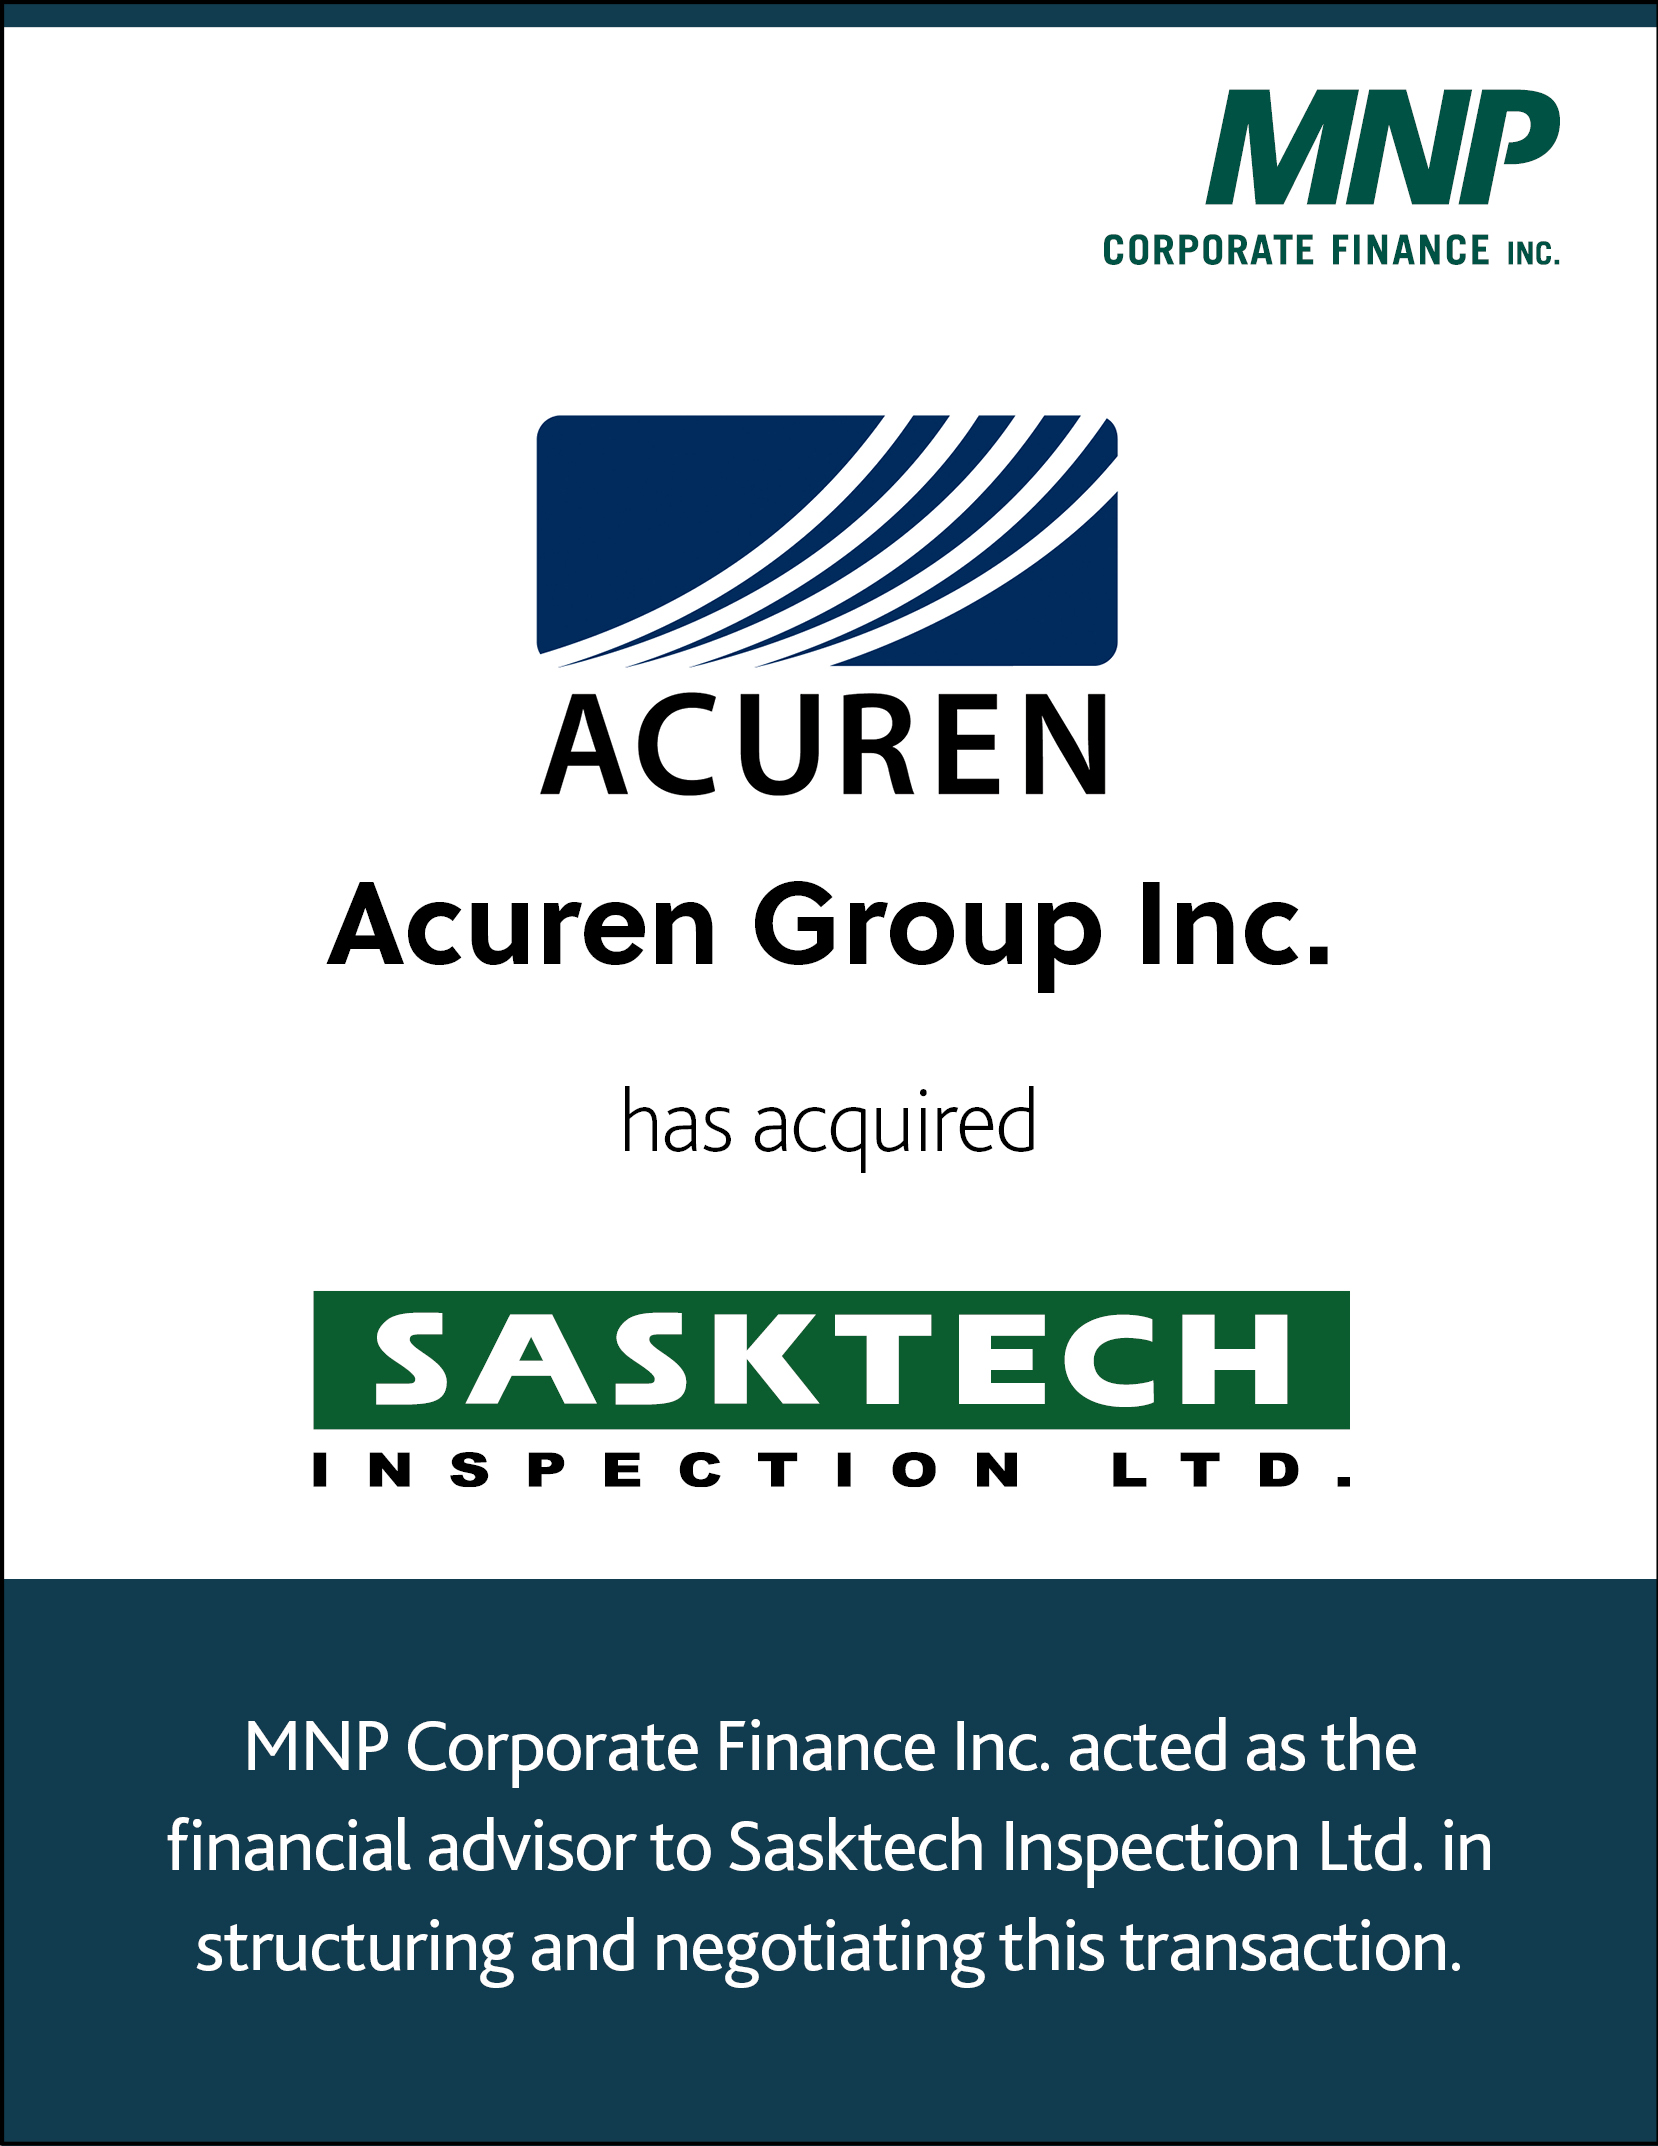 Acuren Group Inc. has acquired Sasktech Inspection Ltd. 